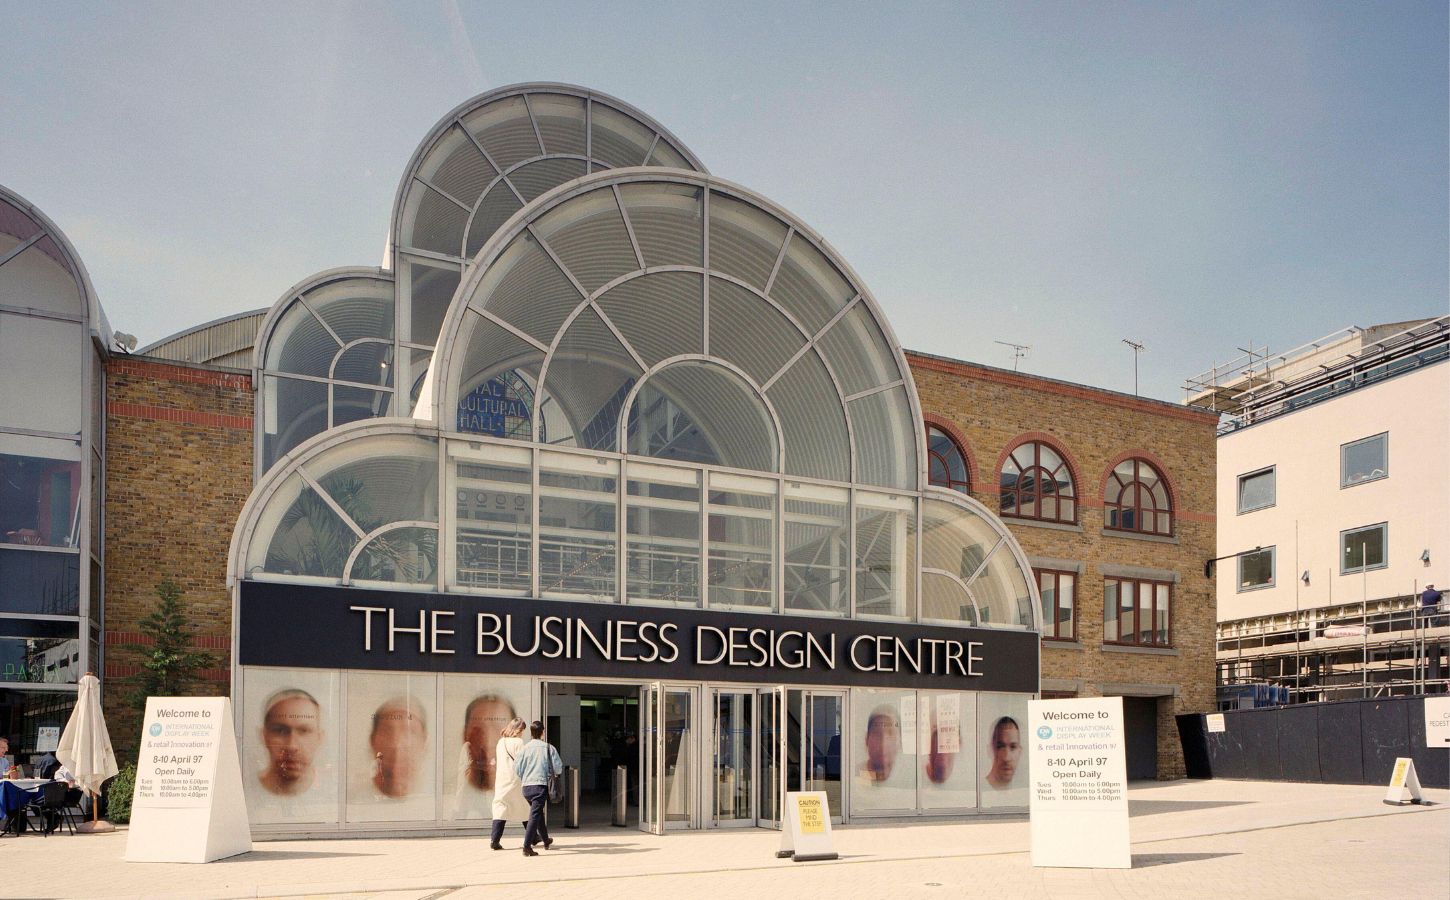 The Business Design Centre in Islington, London